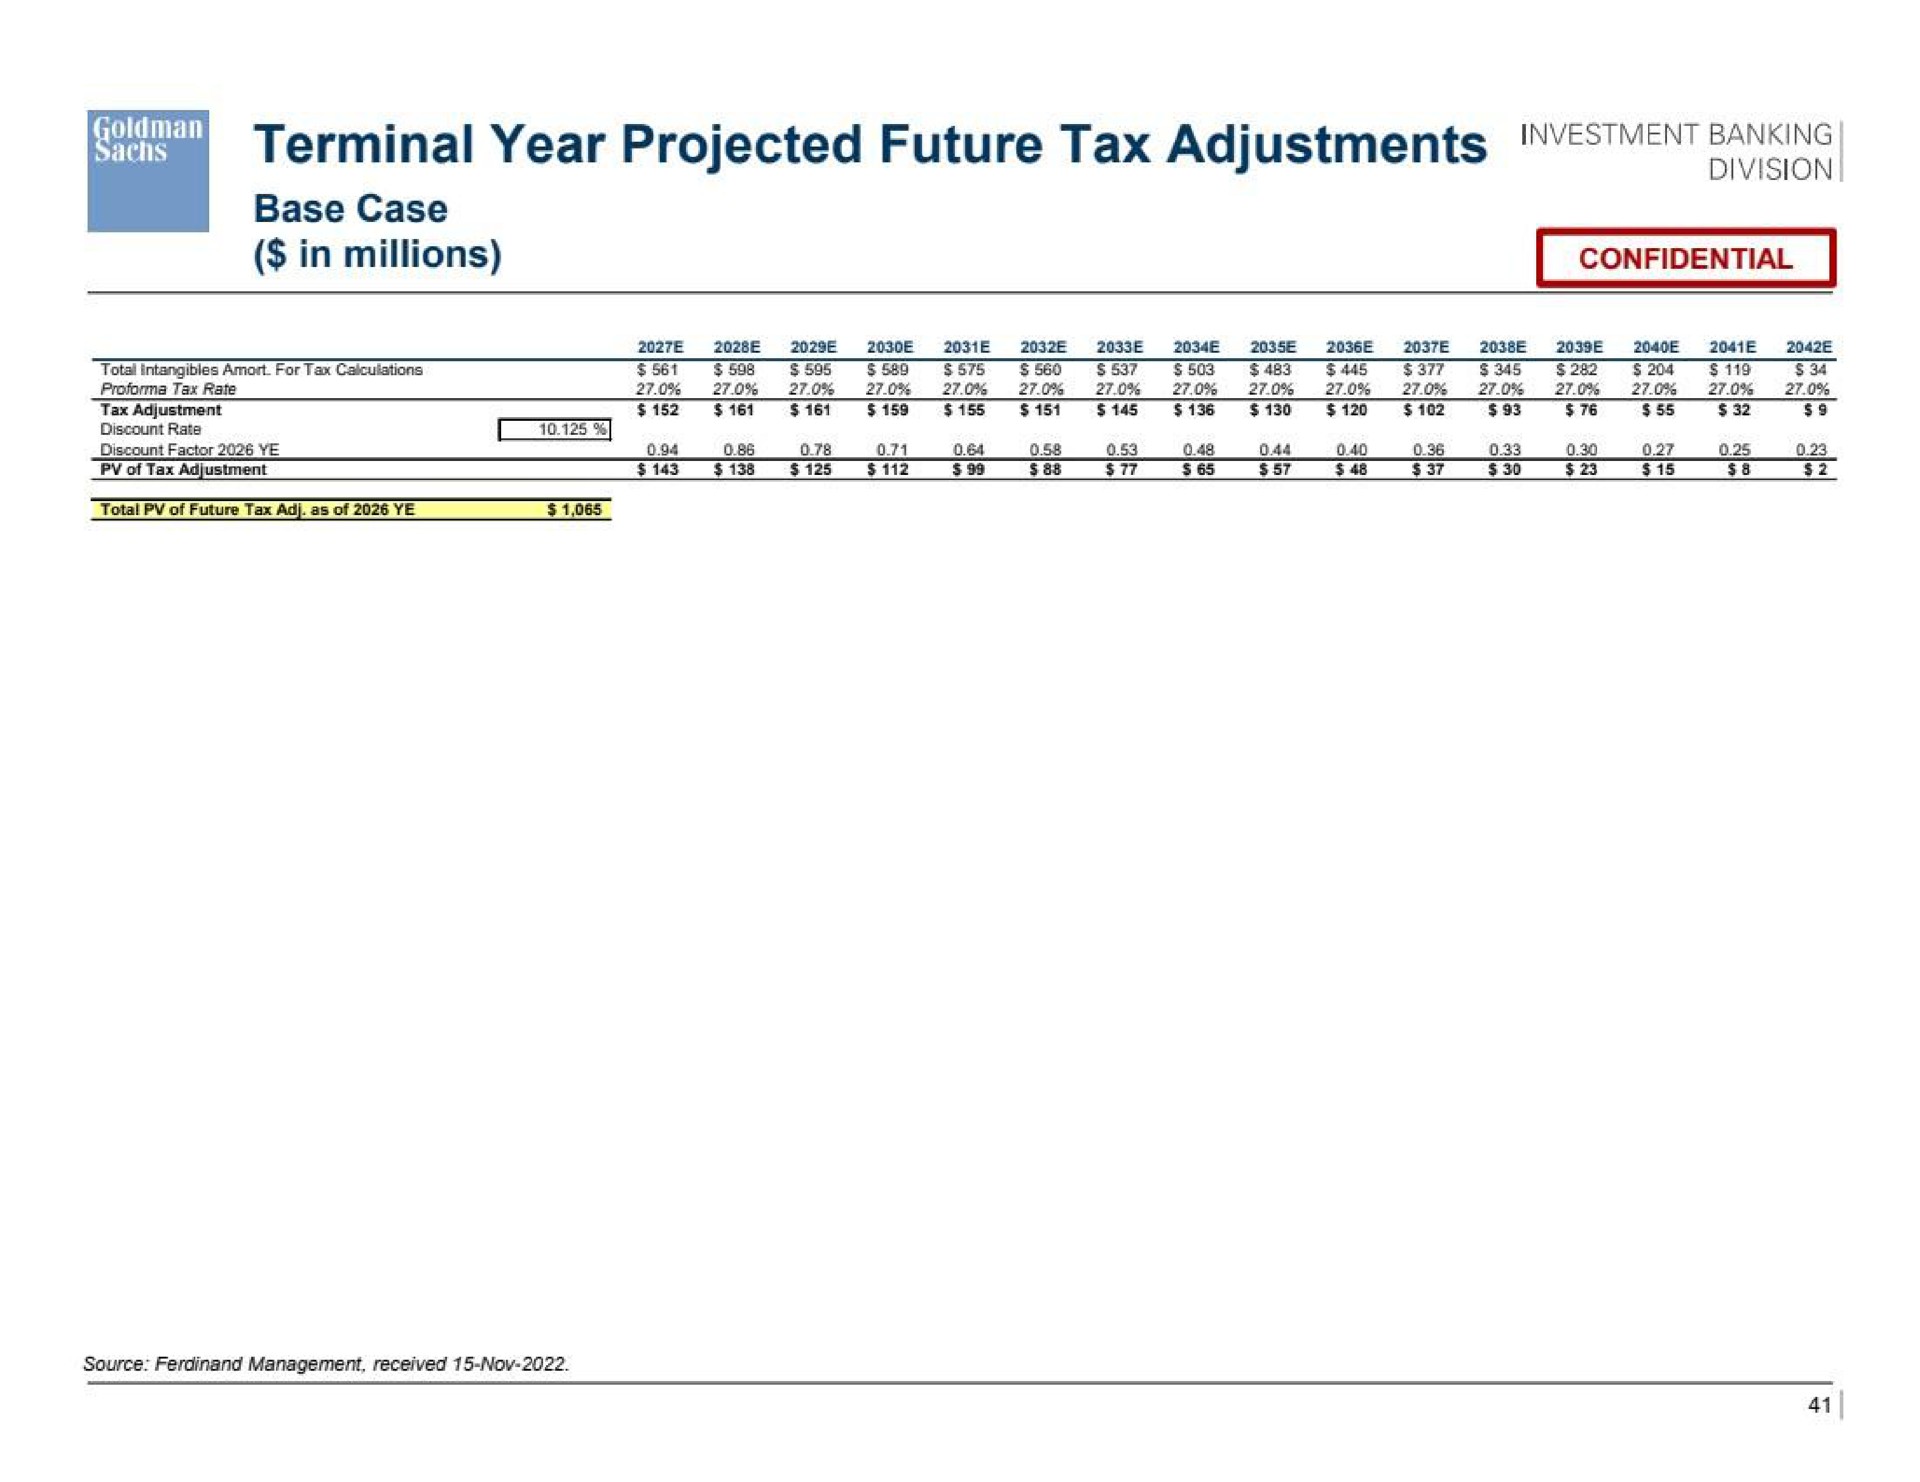 terminal year projected future tax adjustments seen | Goldman Sachs